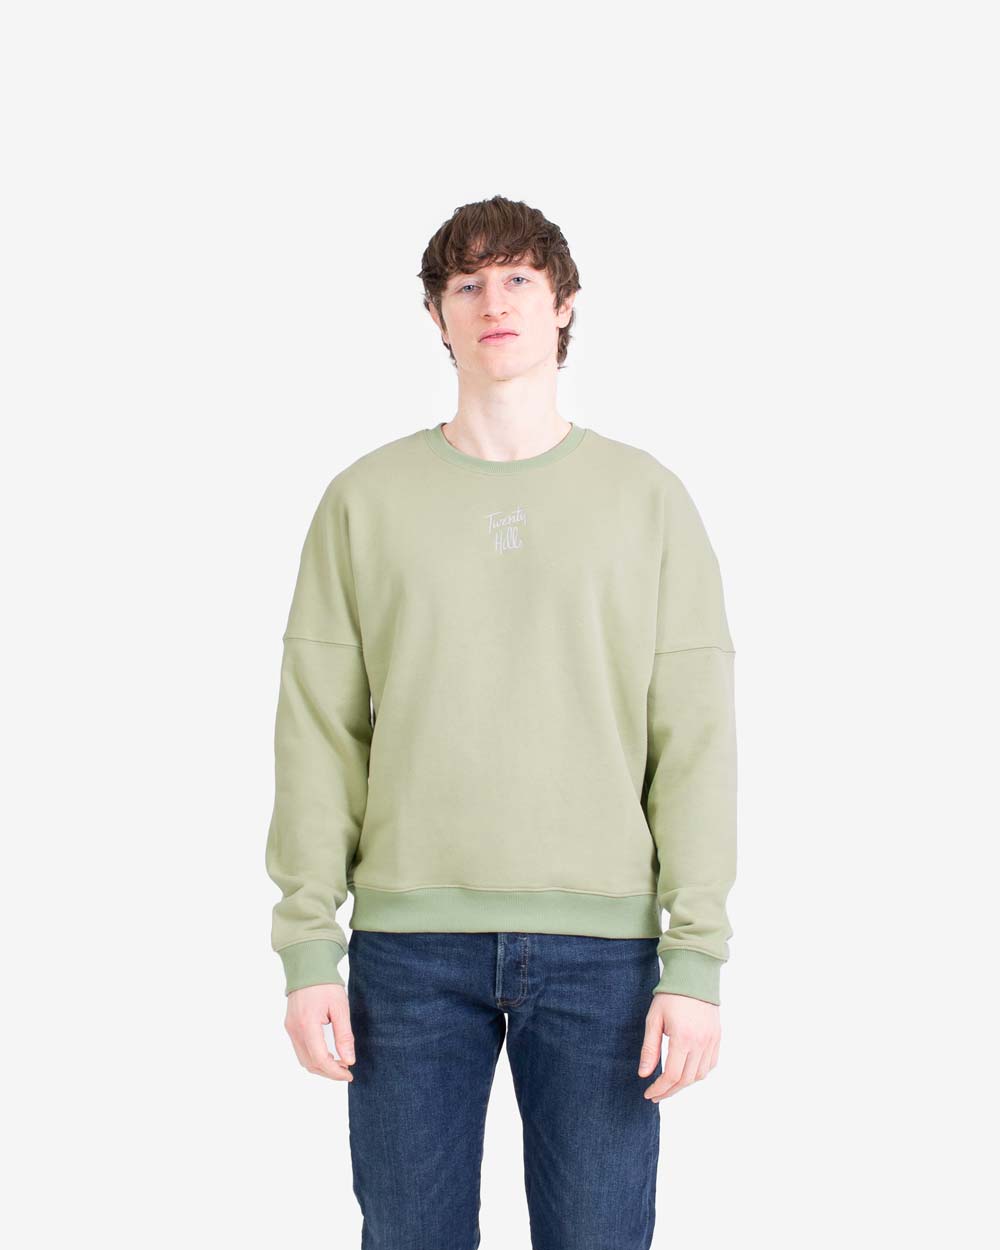 Unisex Sweatshirt (Pear Green)